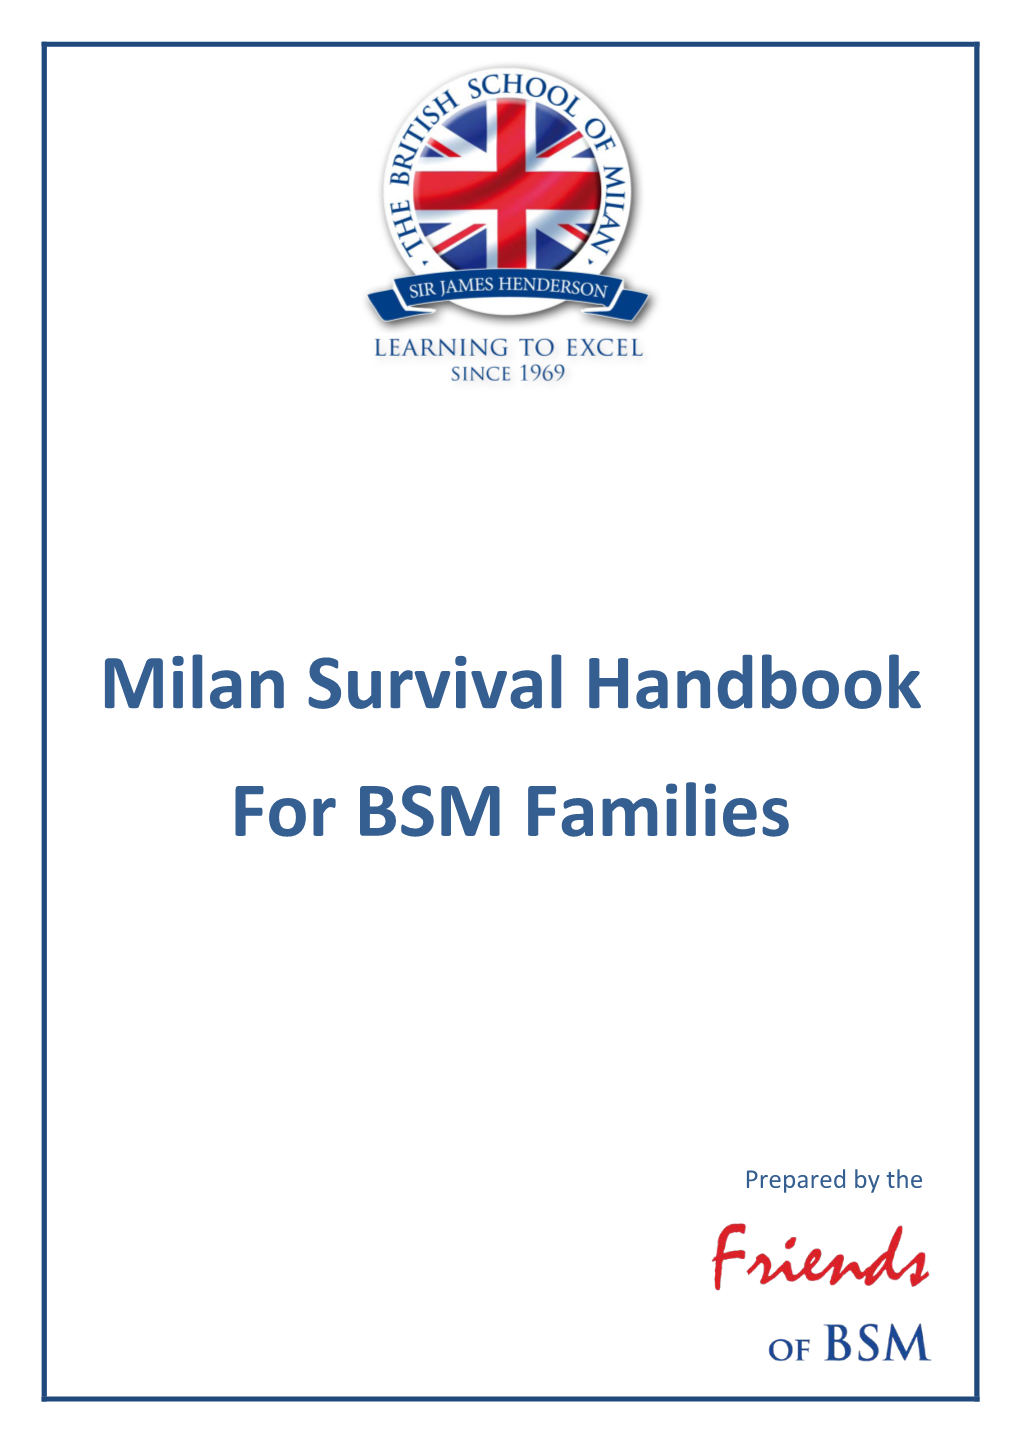 Milan Survival Handbook for BSM Families